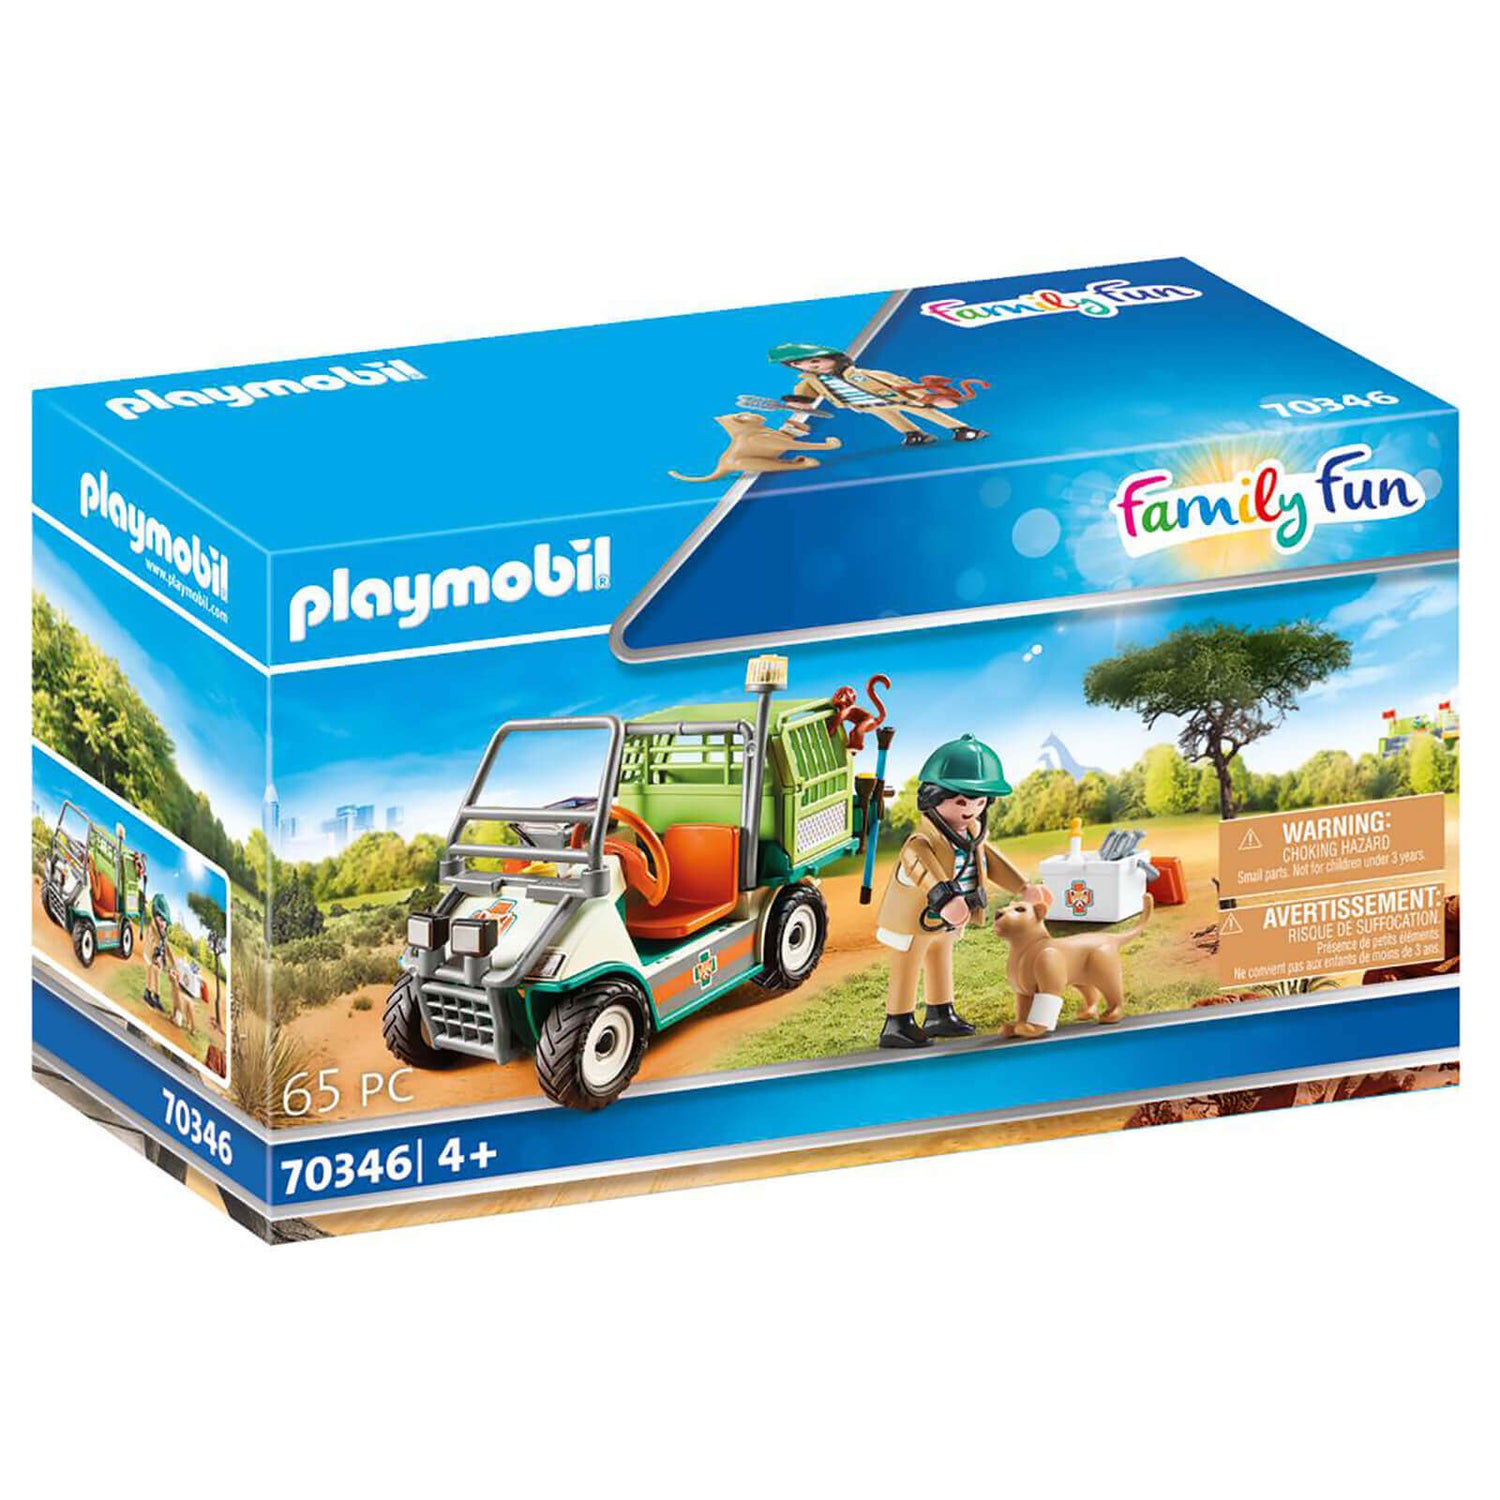 Playmobil Family Fun Zoo Vet with Medical Cart (70346)